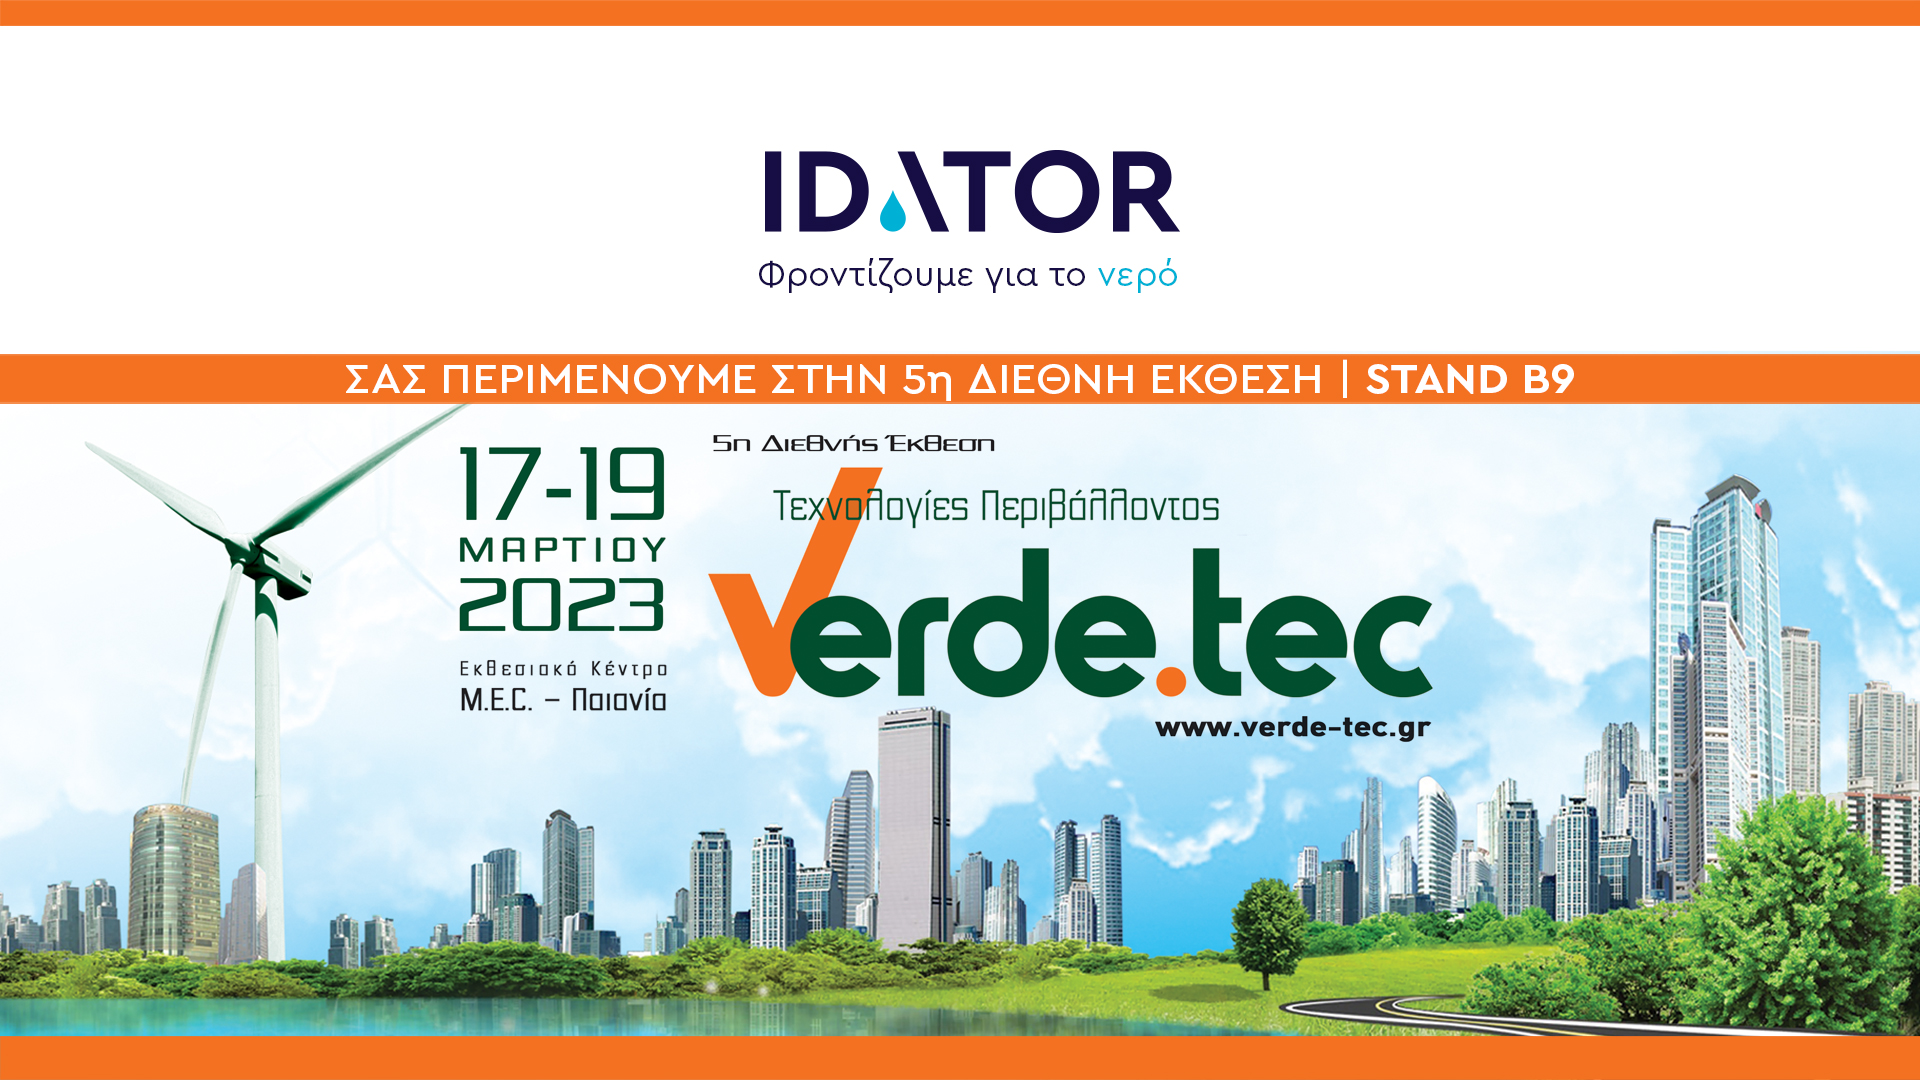 <h1>Η Idator στην 5η Διεθνή Έκθεση Τεχνολογιών Περιβάλλοντος Verde.Tec 2023</h1>